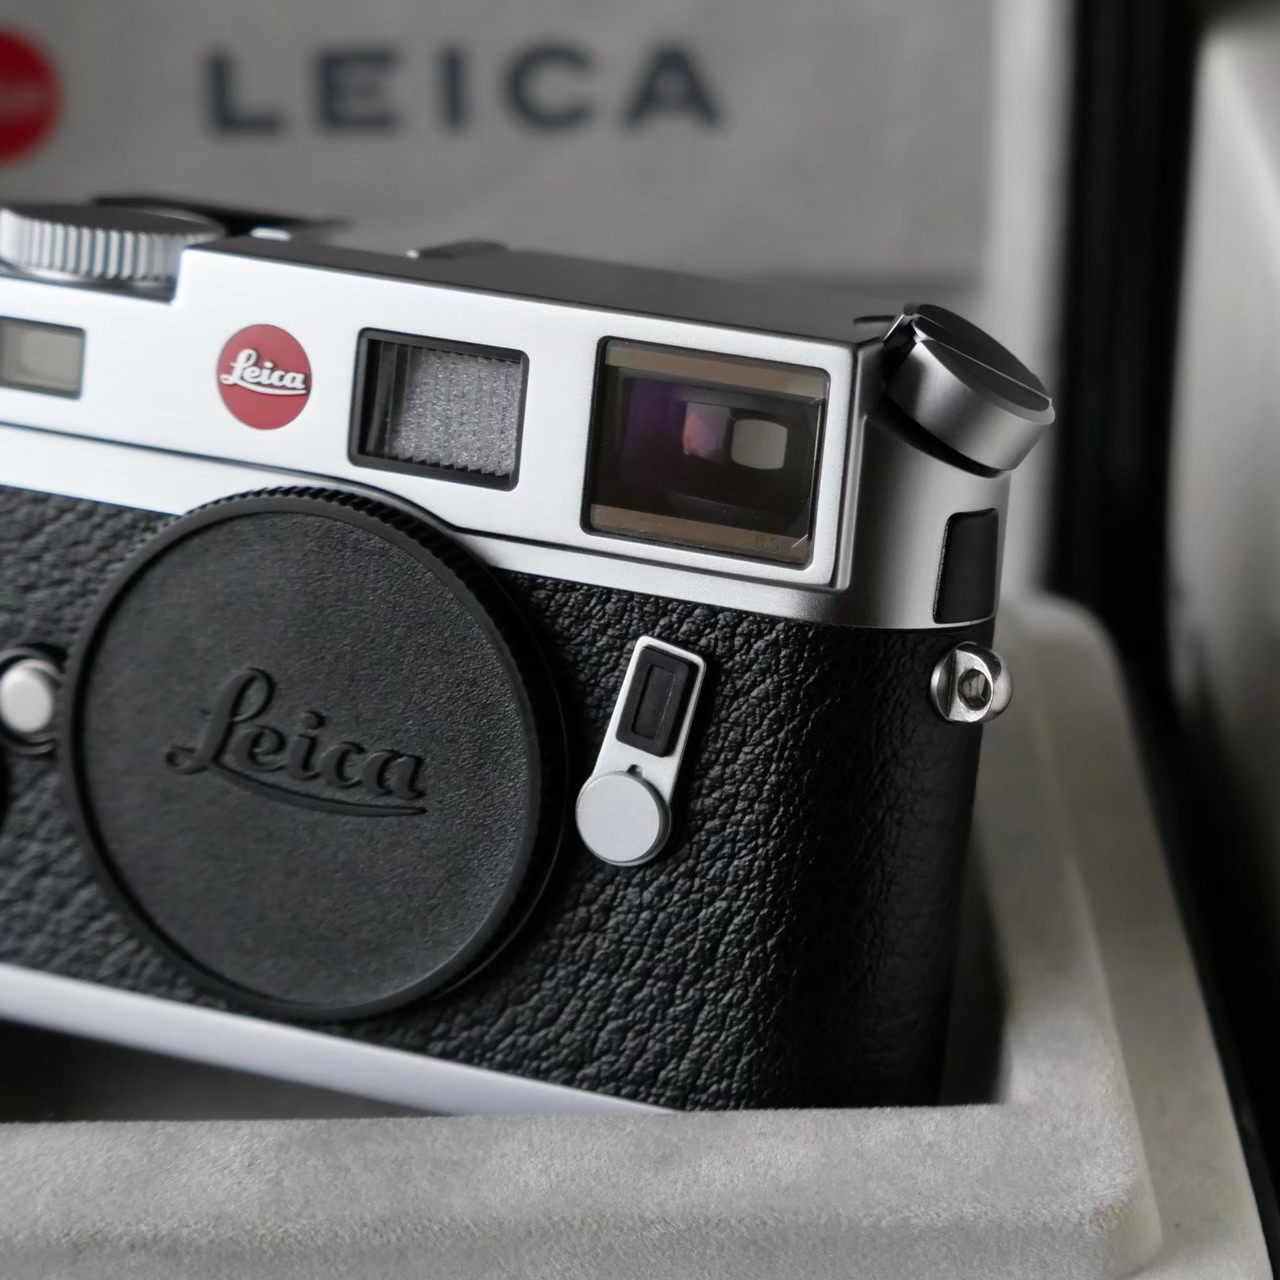 Leica M6 TTL 0.58 Silver - นายตัวน้อย